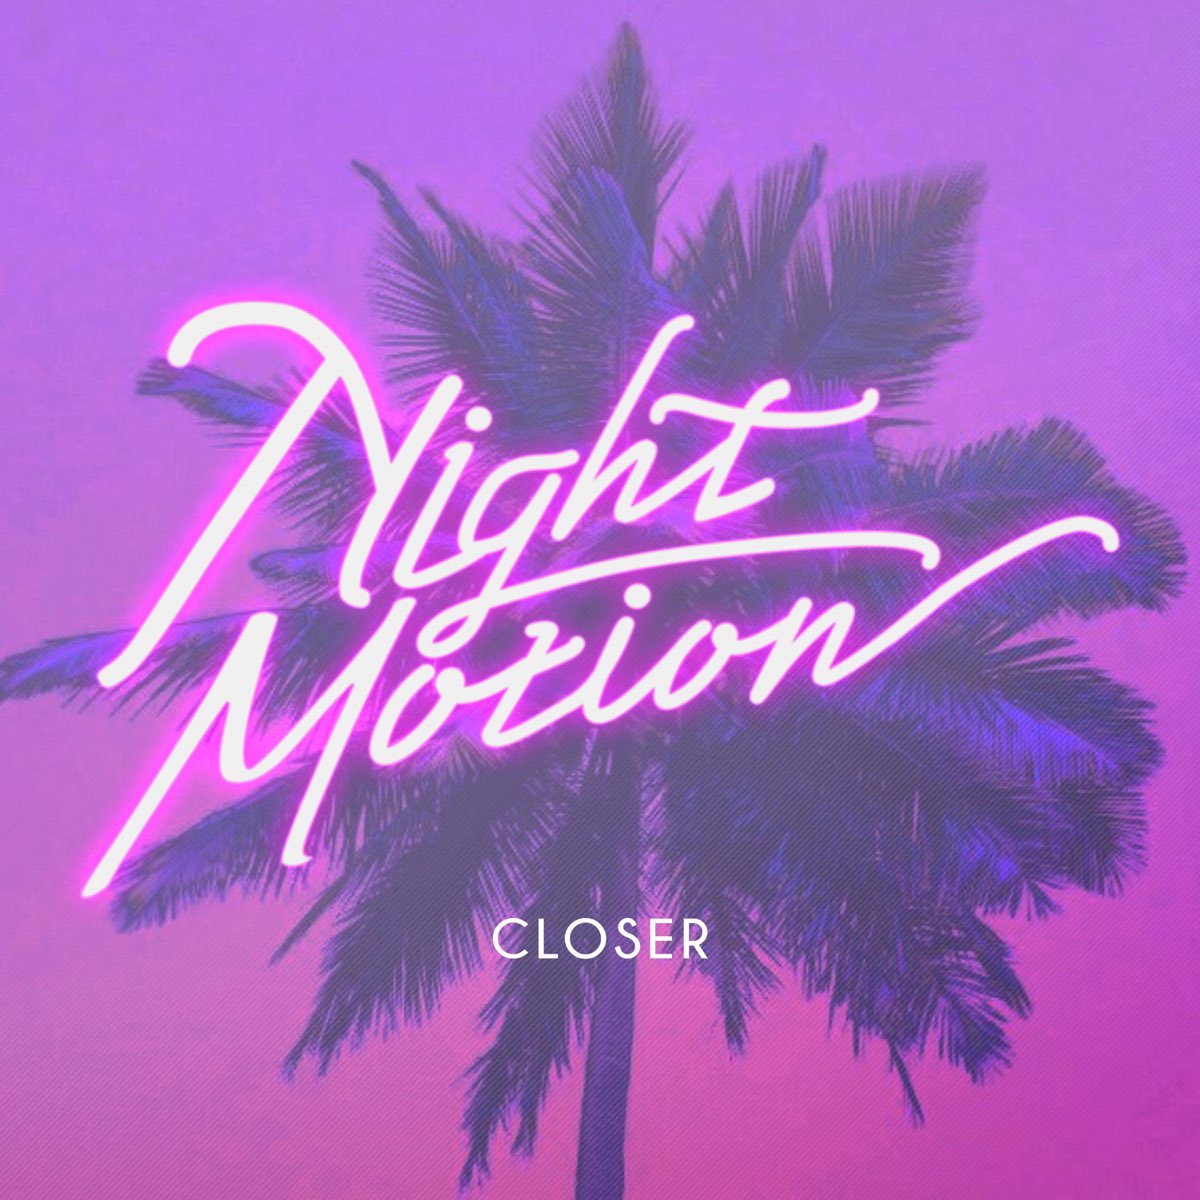 Night Motion. Every Night Motion. Night Clocer. Closer music